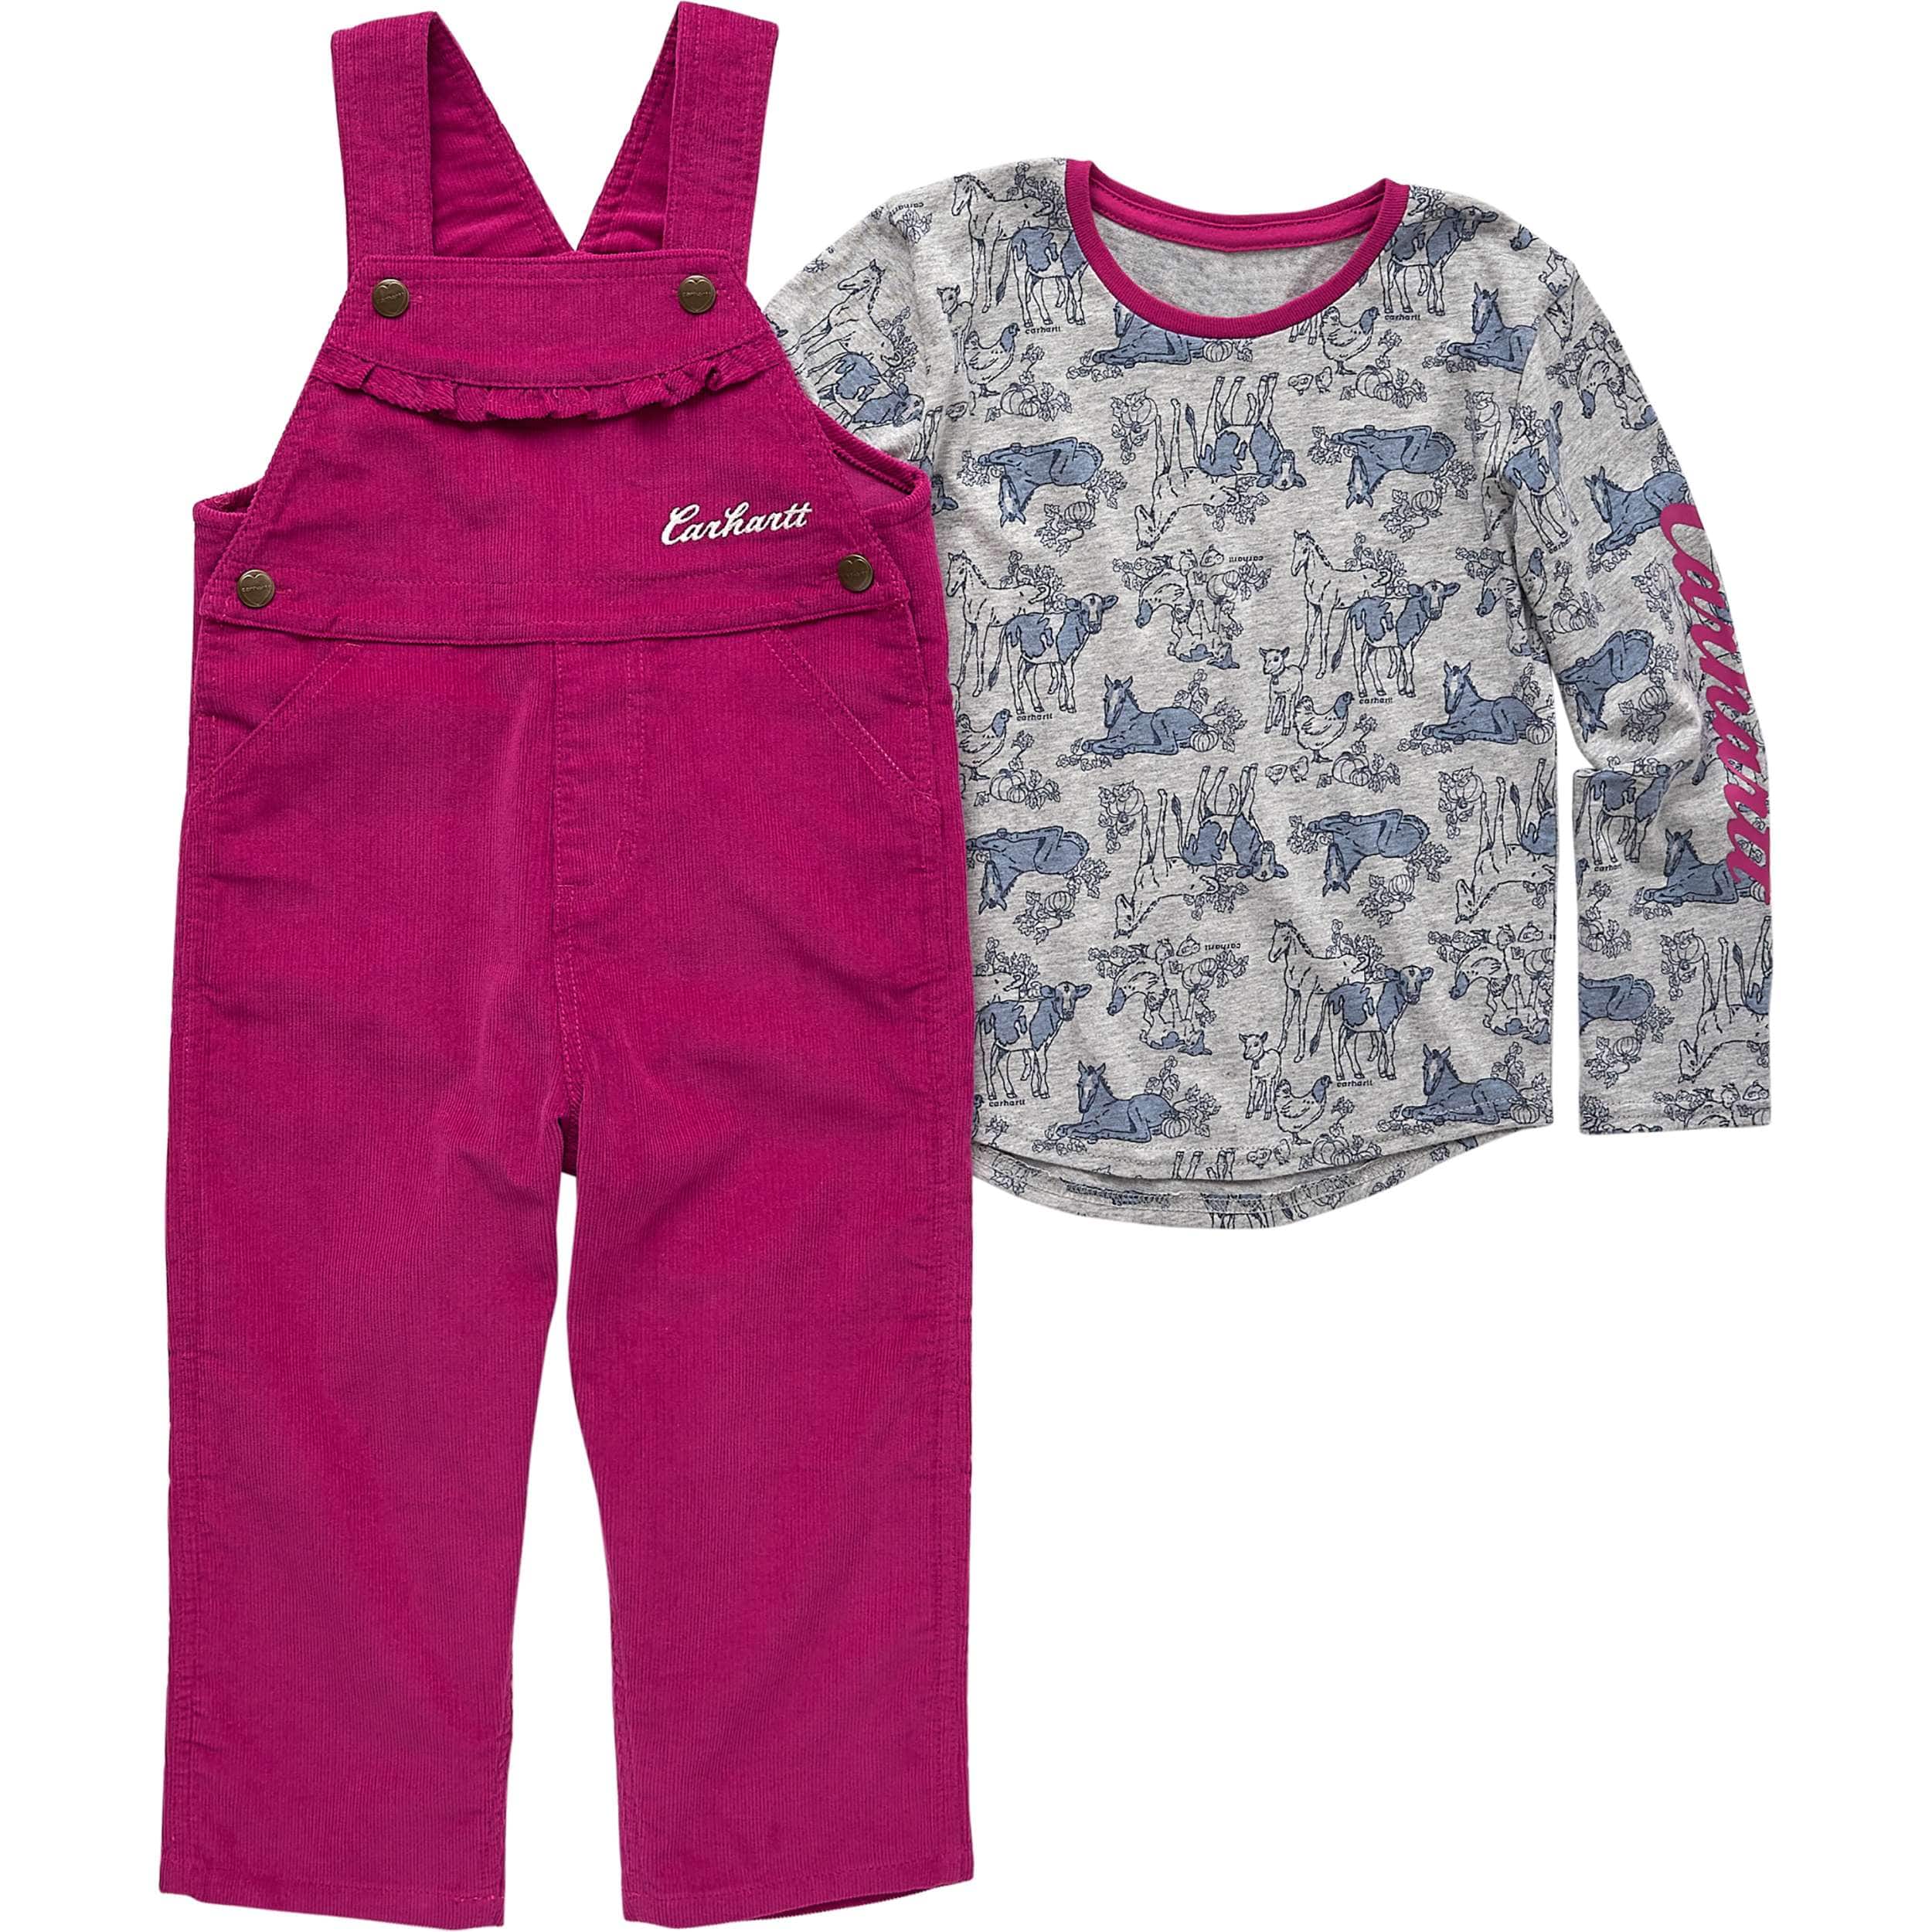 Toddler Girls' Clothing (Size 2T-4T) | Carhartt | Carhartt